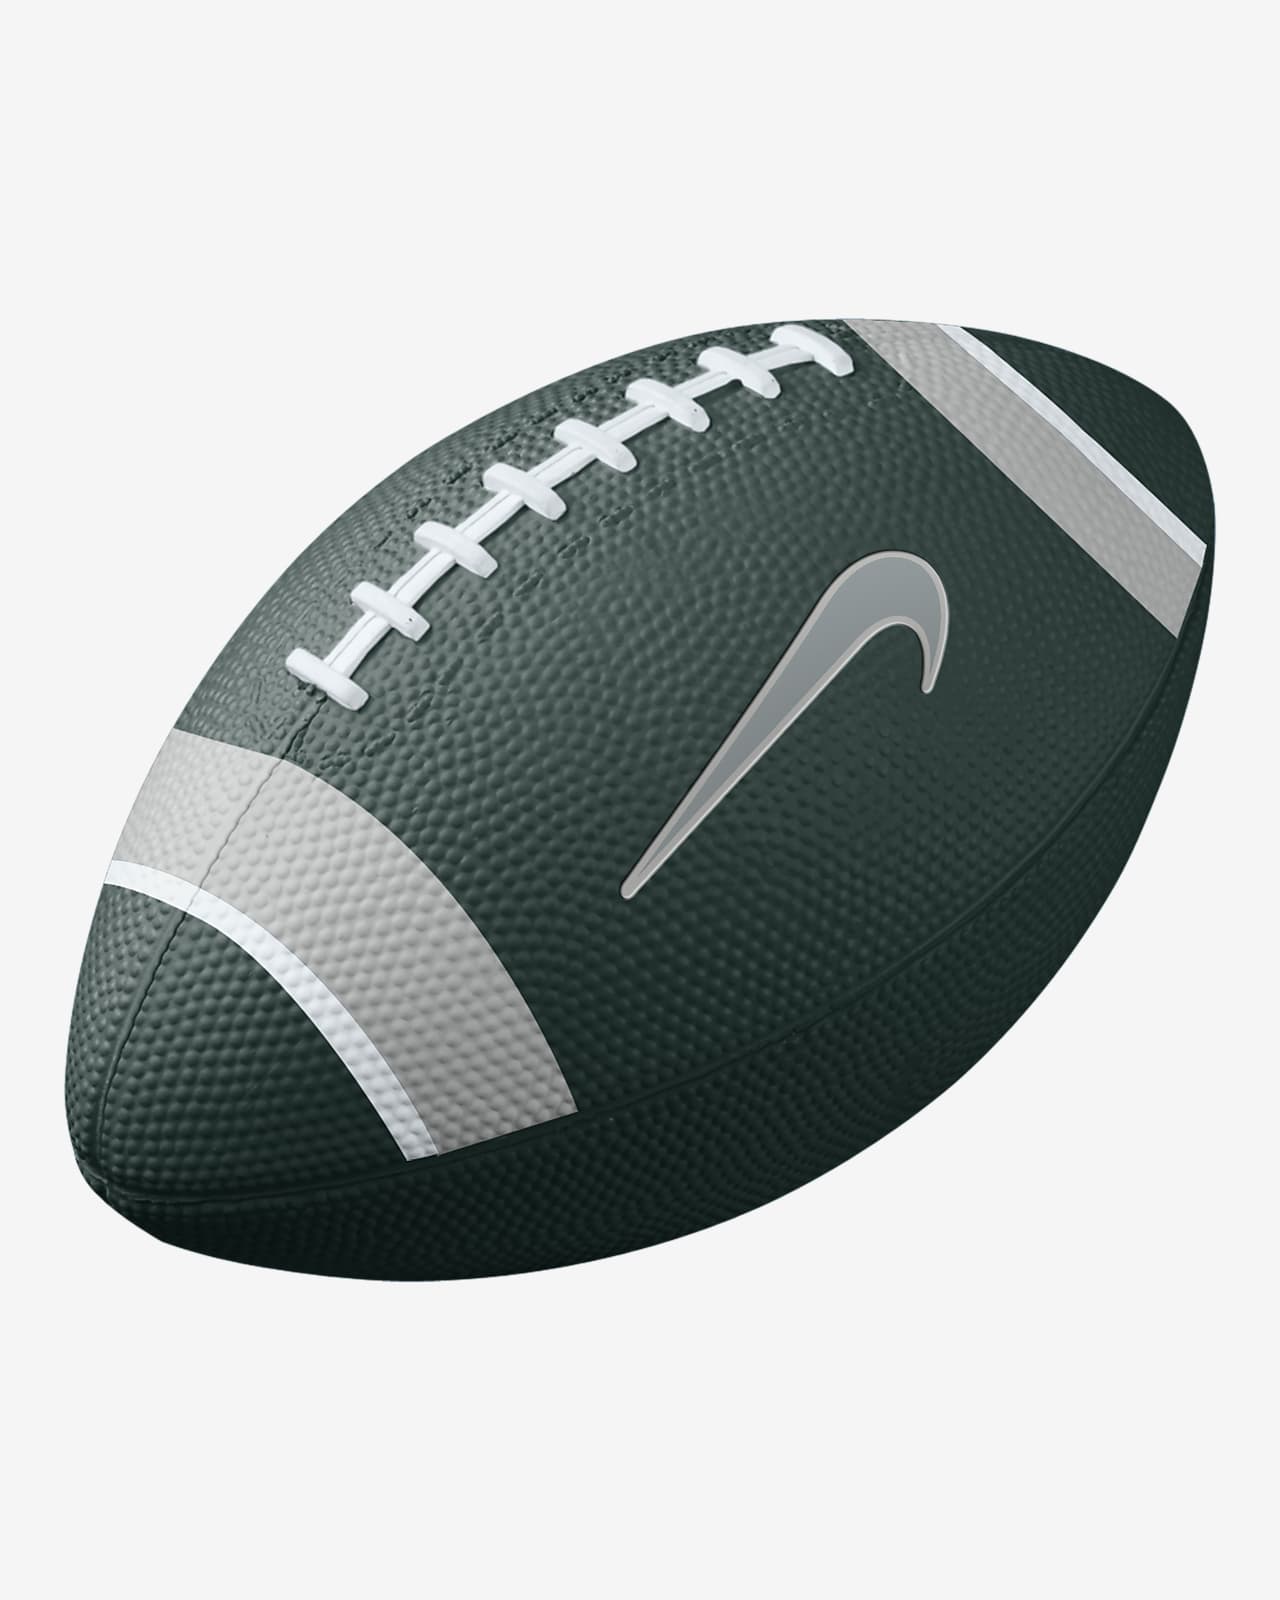 Mini But de football,1.2x0.8 m,référence,400-oval